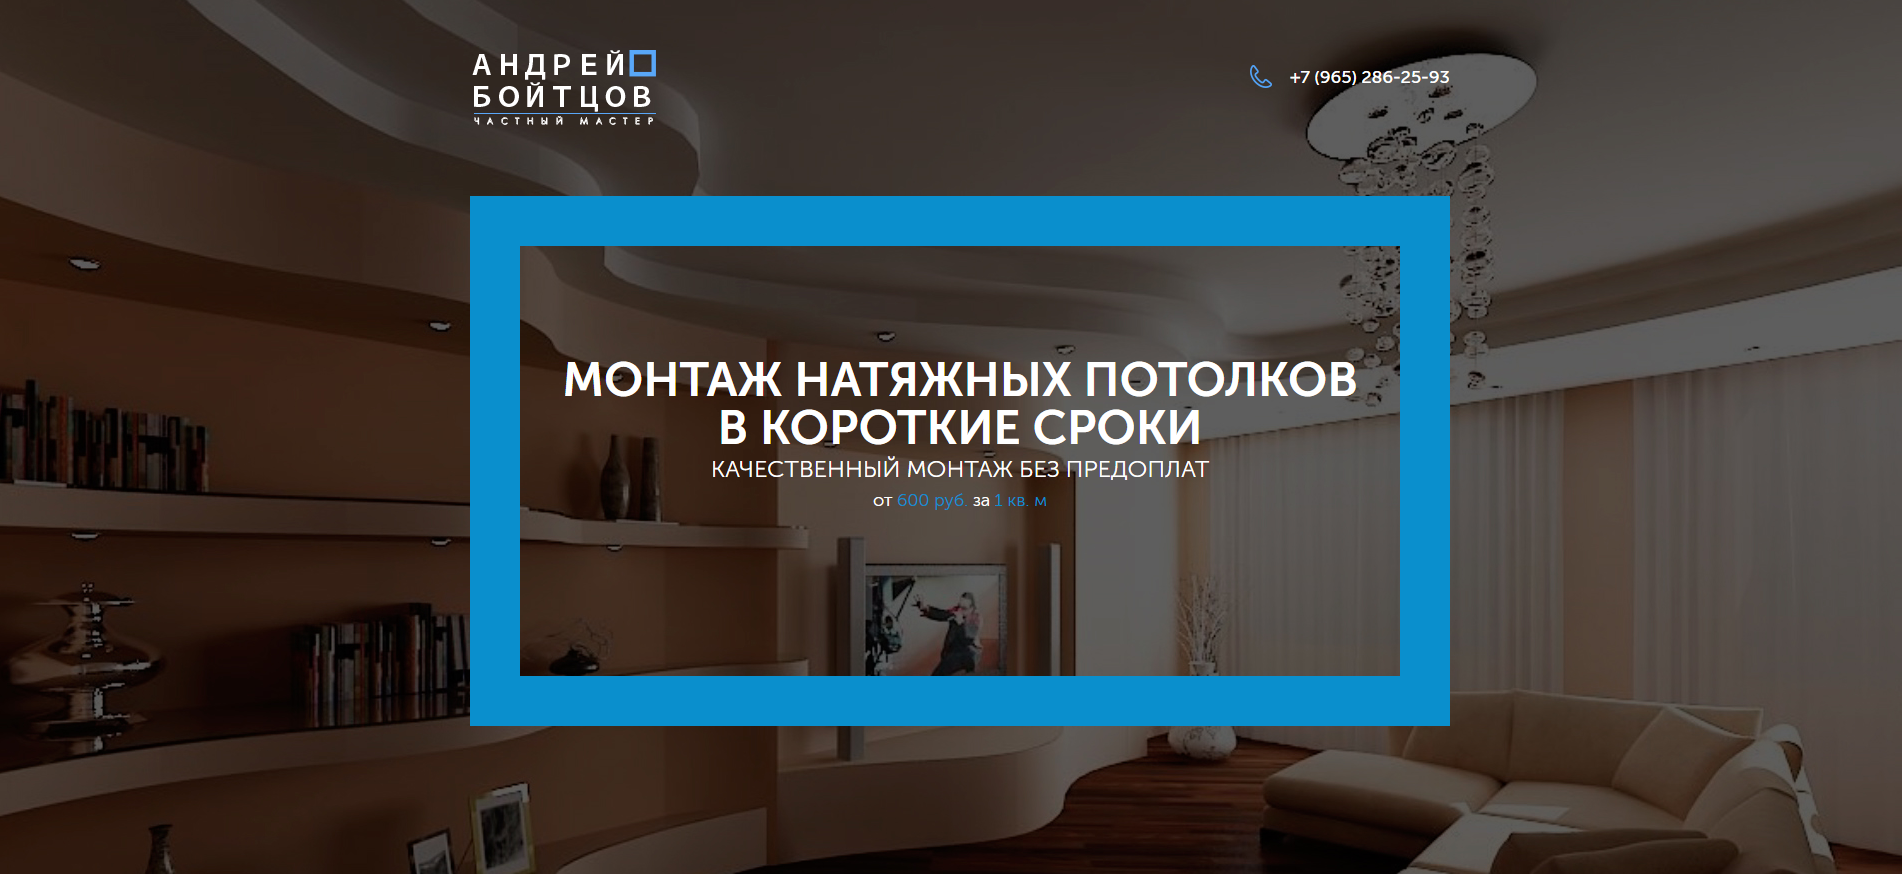 Boitcof.ru - Монтаж натяжных потолков